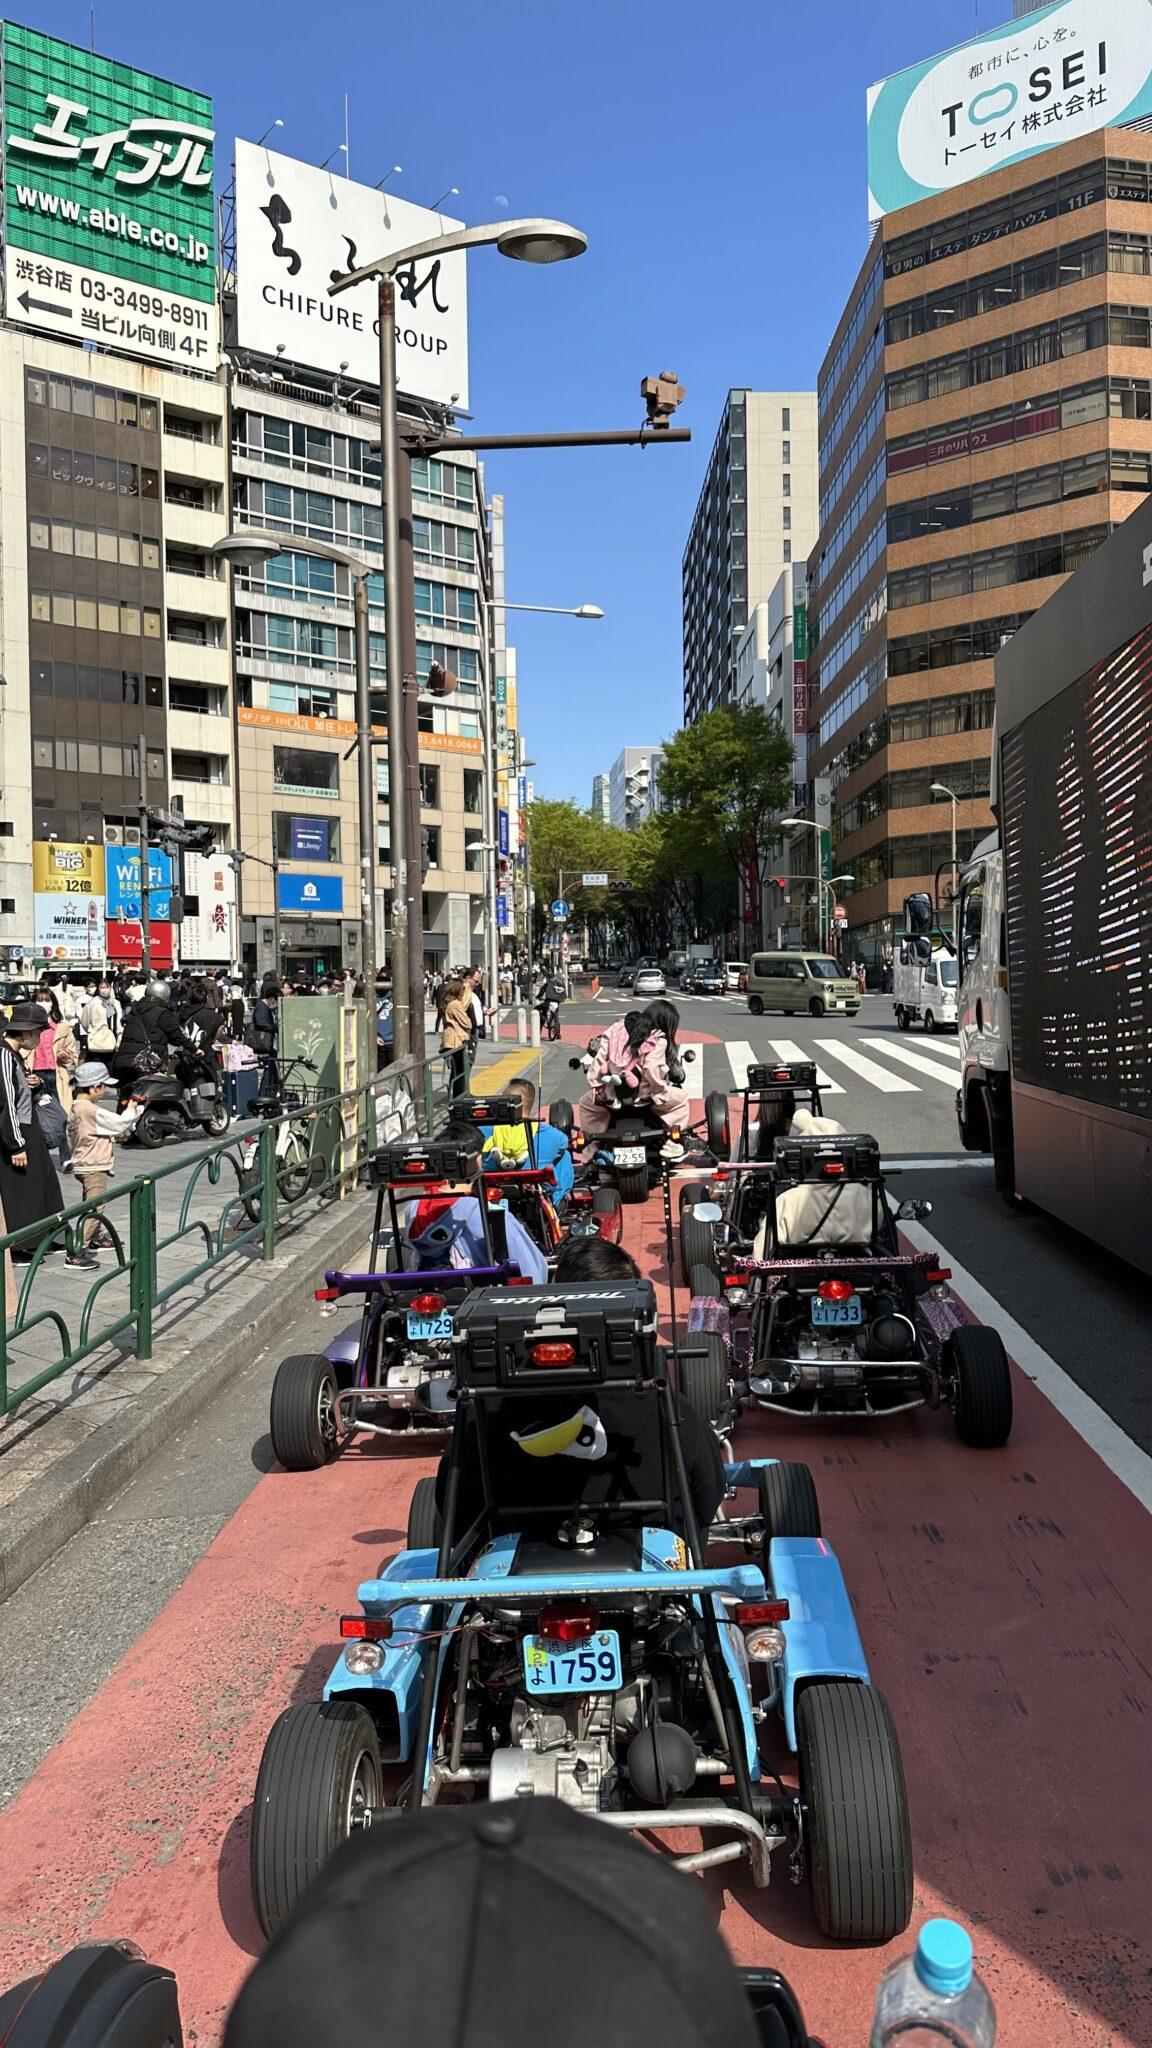 Go-karts stopped at streetlight